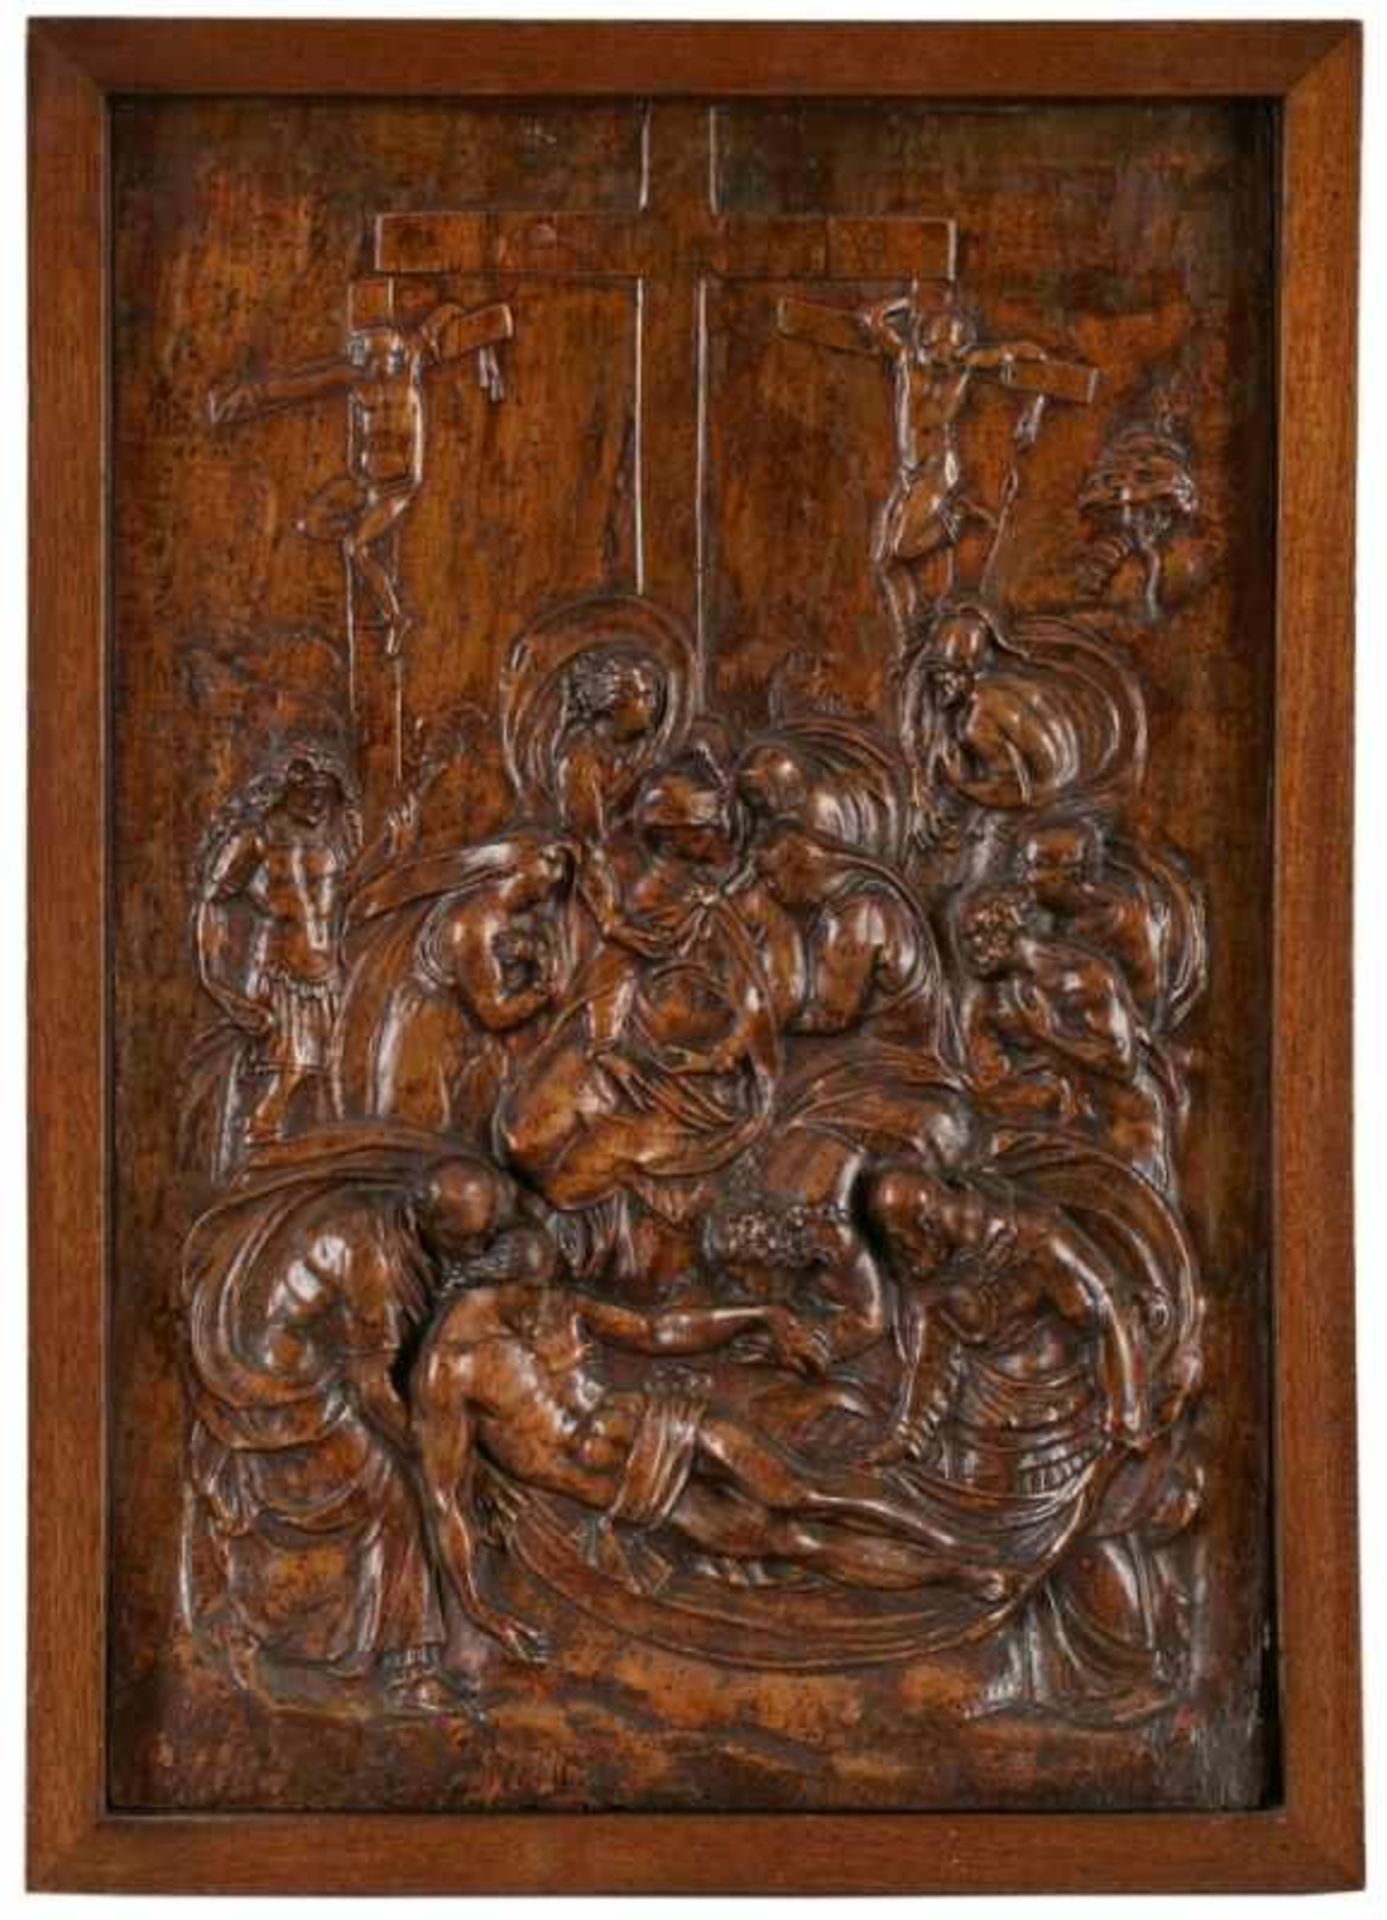 Reliefbild "Kreuzabnahme", Barock, süddt.Anfang 18. Jh. Flachreliefschnitzterei in Nussbaum